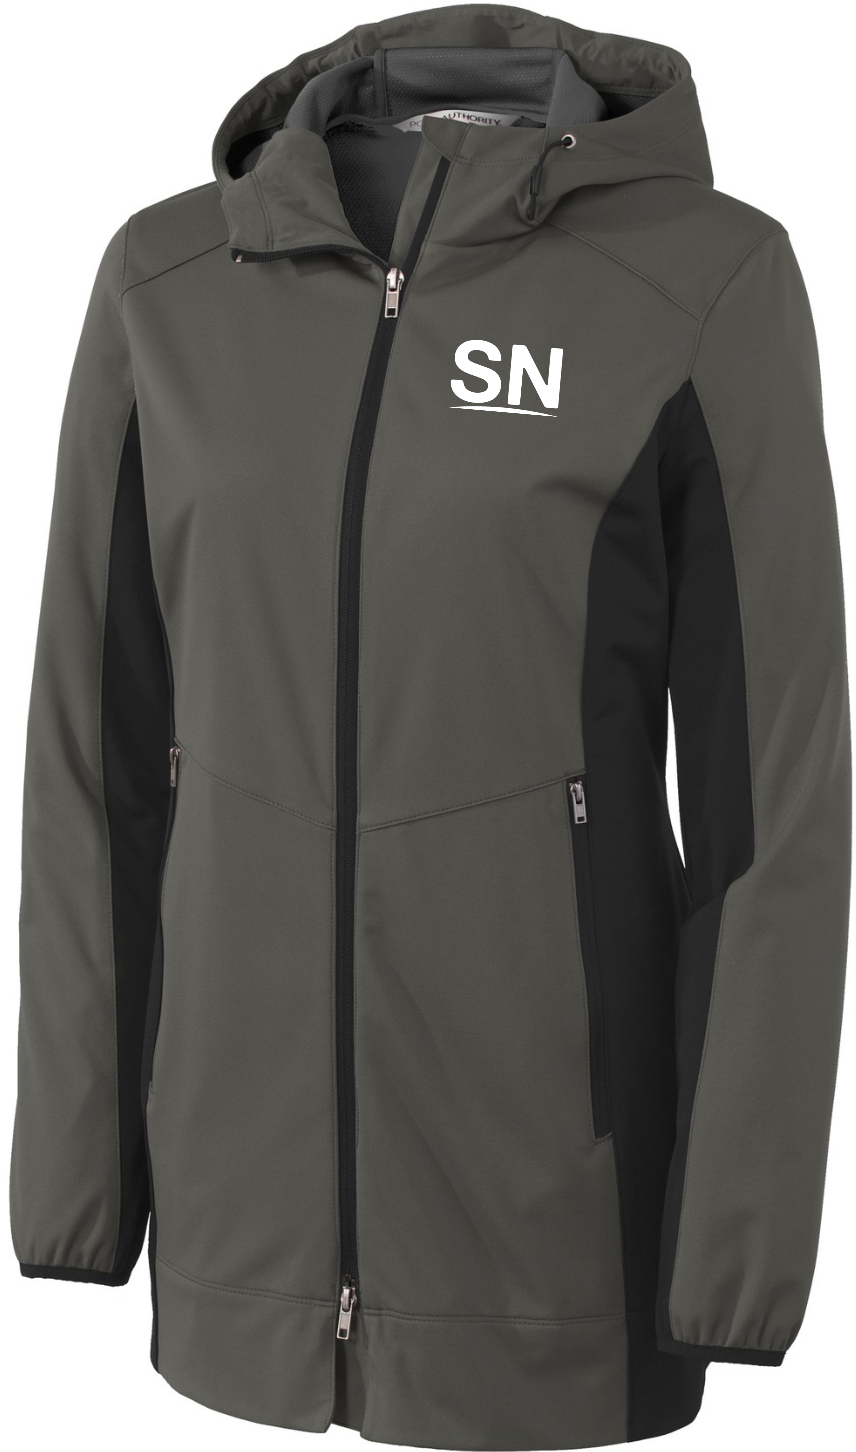 Stambaugh Ness Standard Hooded Soft Shell Jacket